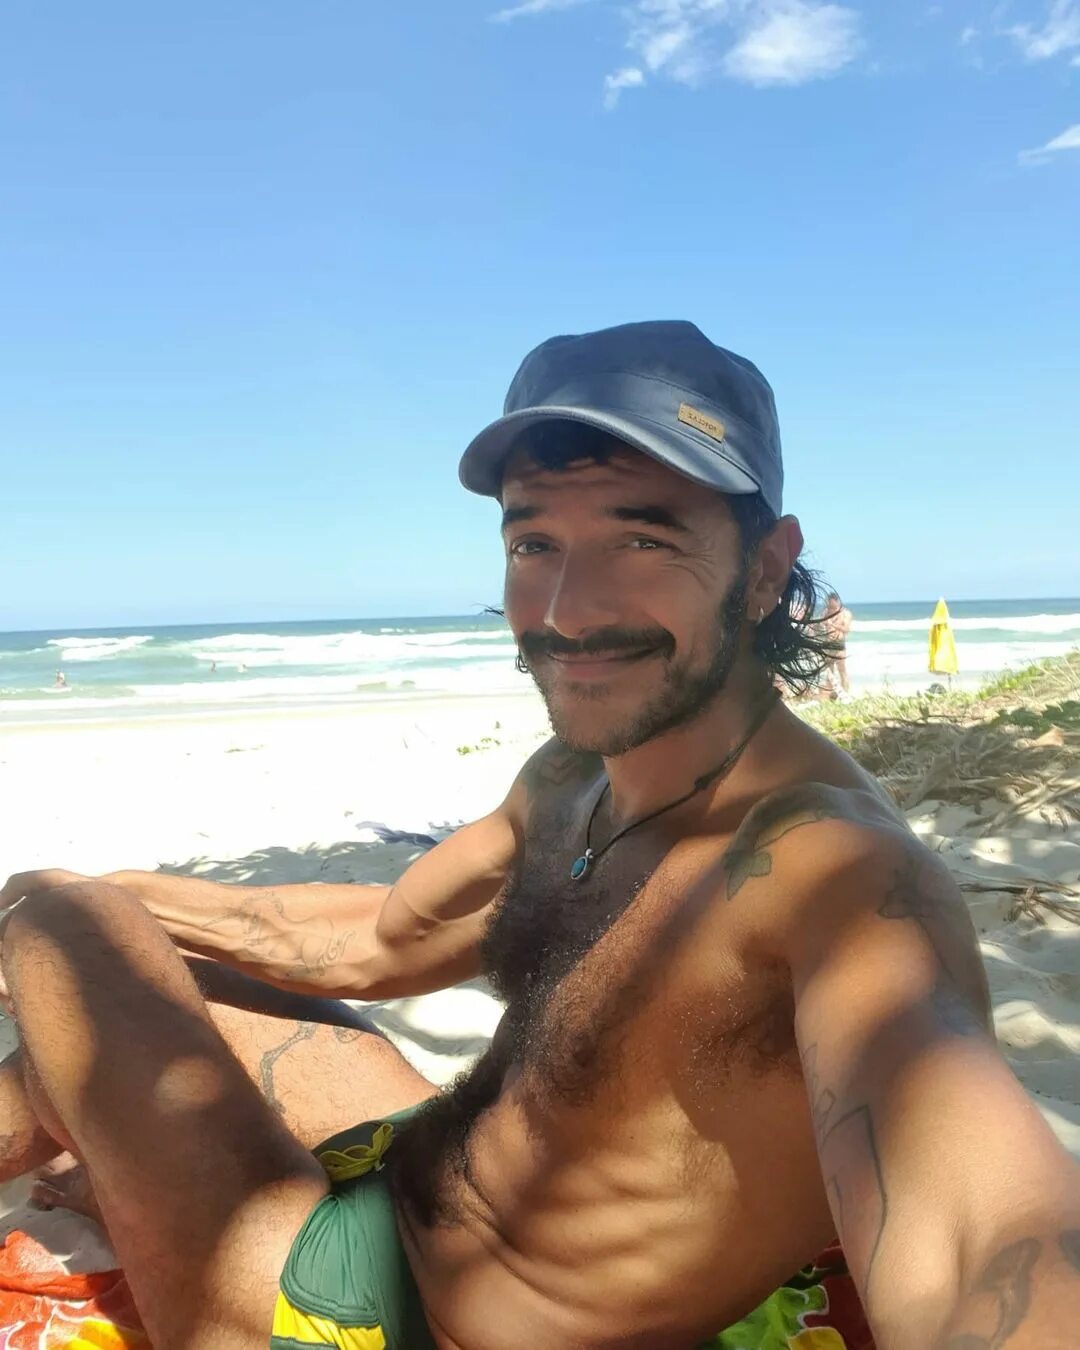 Ollie kelev в Instagram: "Beach day" .